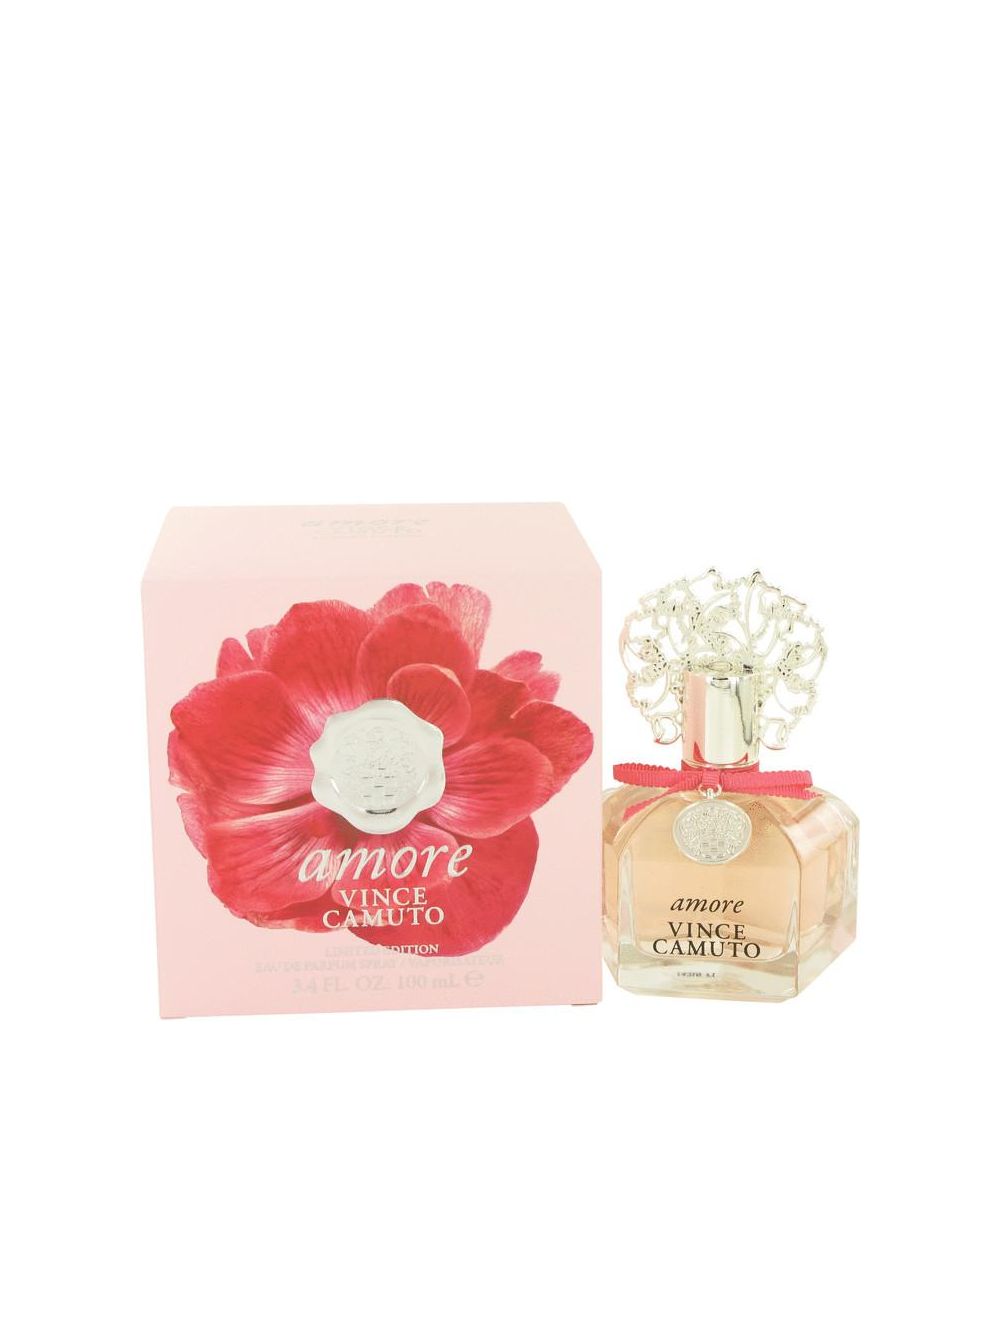 Canada Online Perfumes Shop  Buy Fragrances Vince Camuto Amore